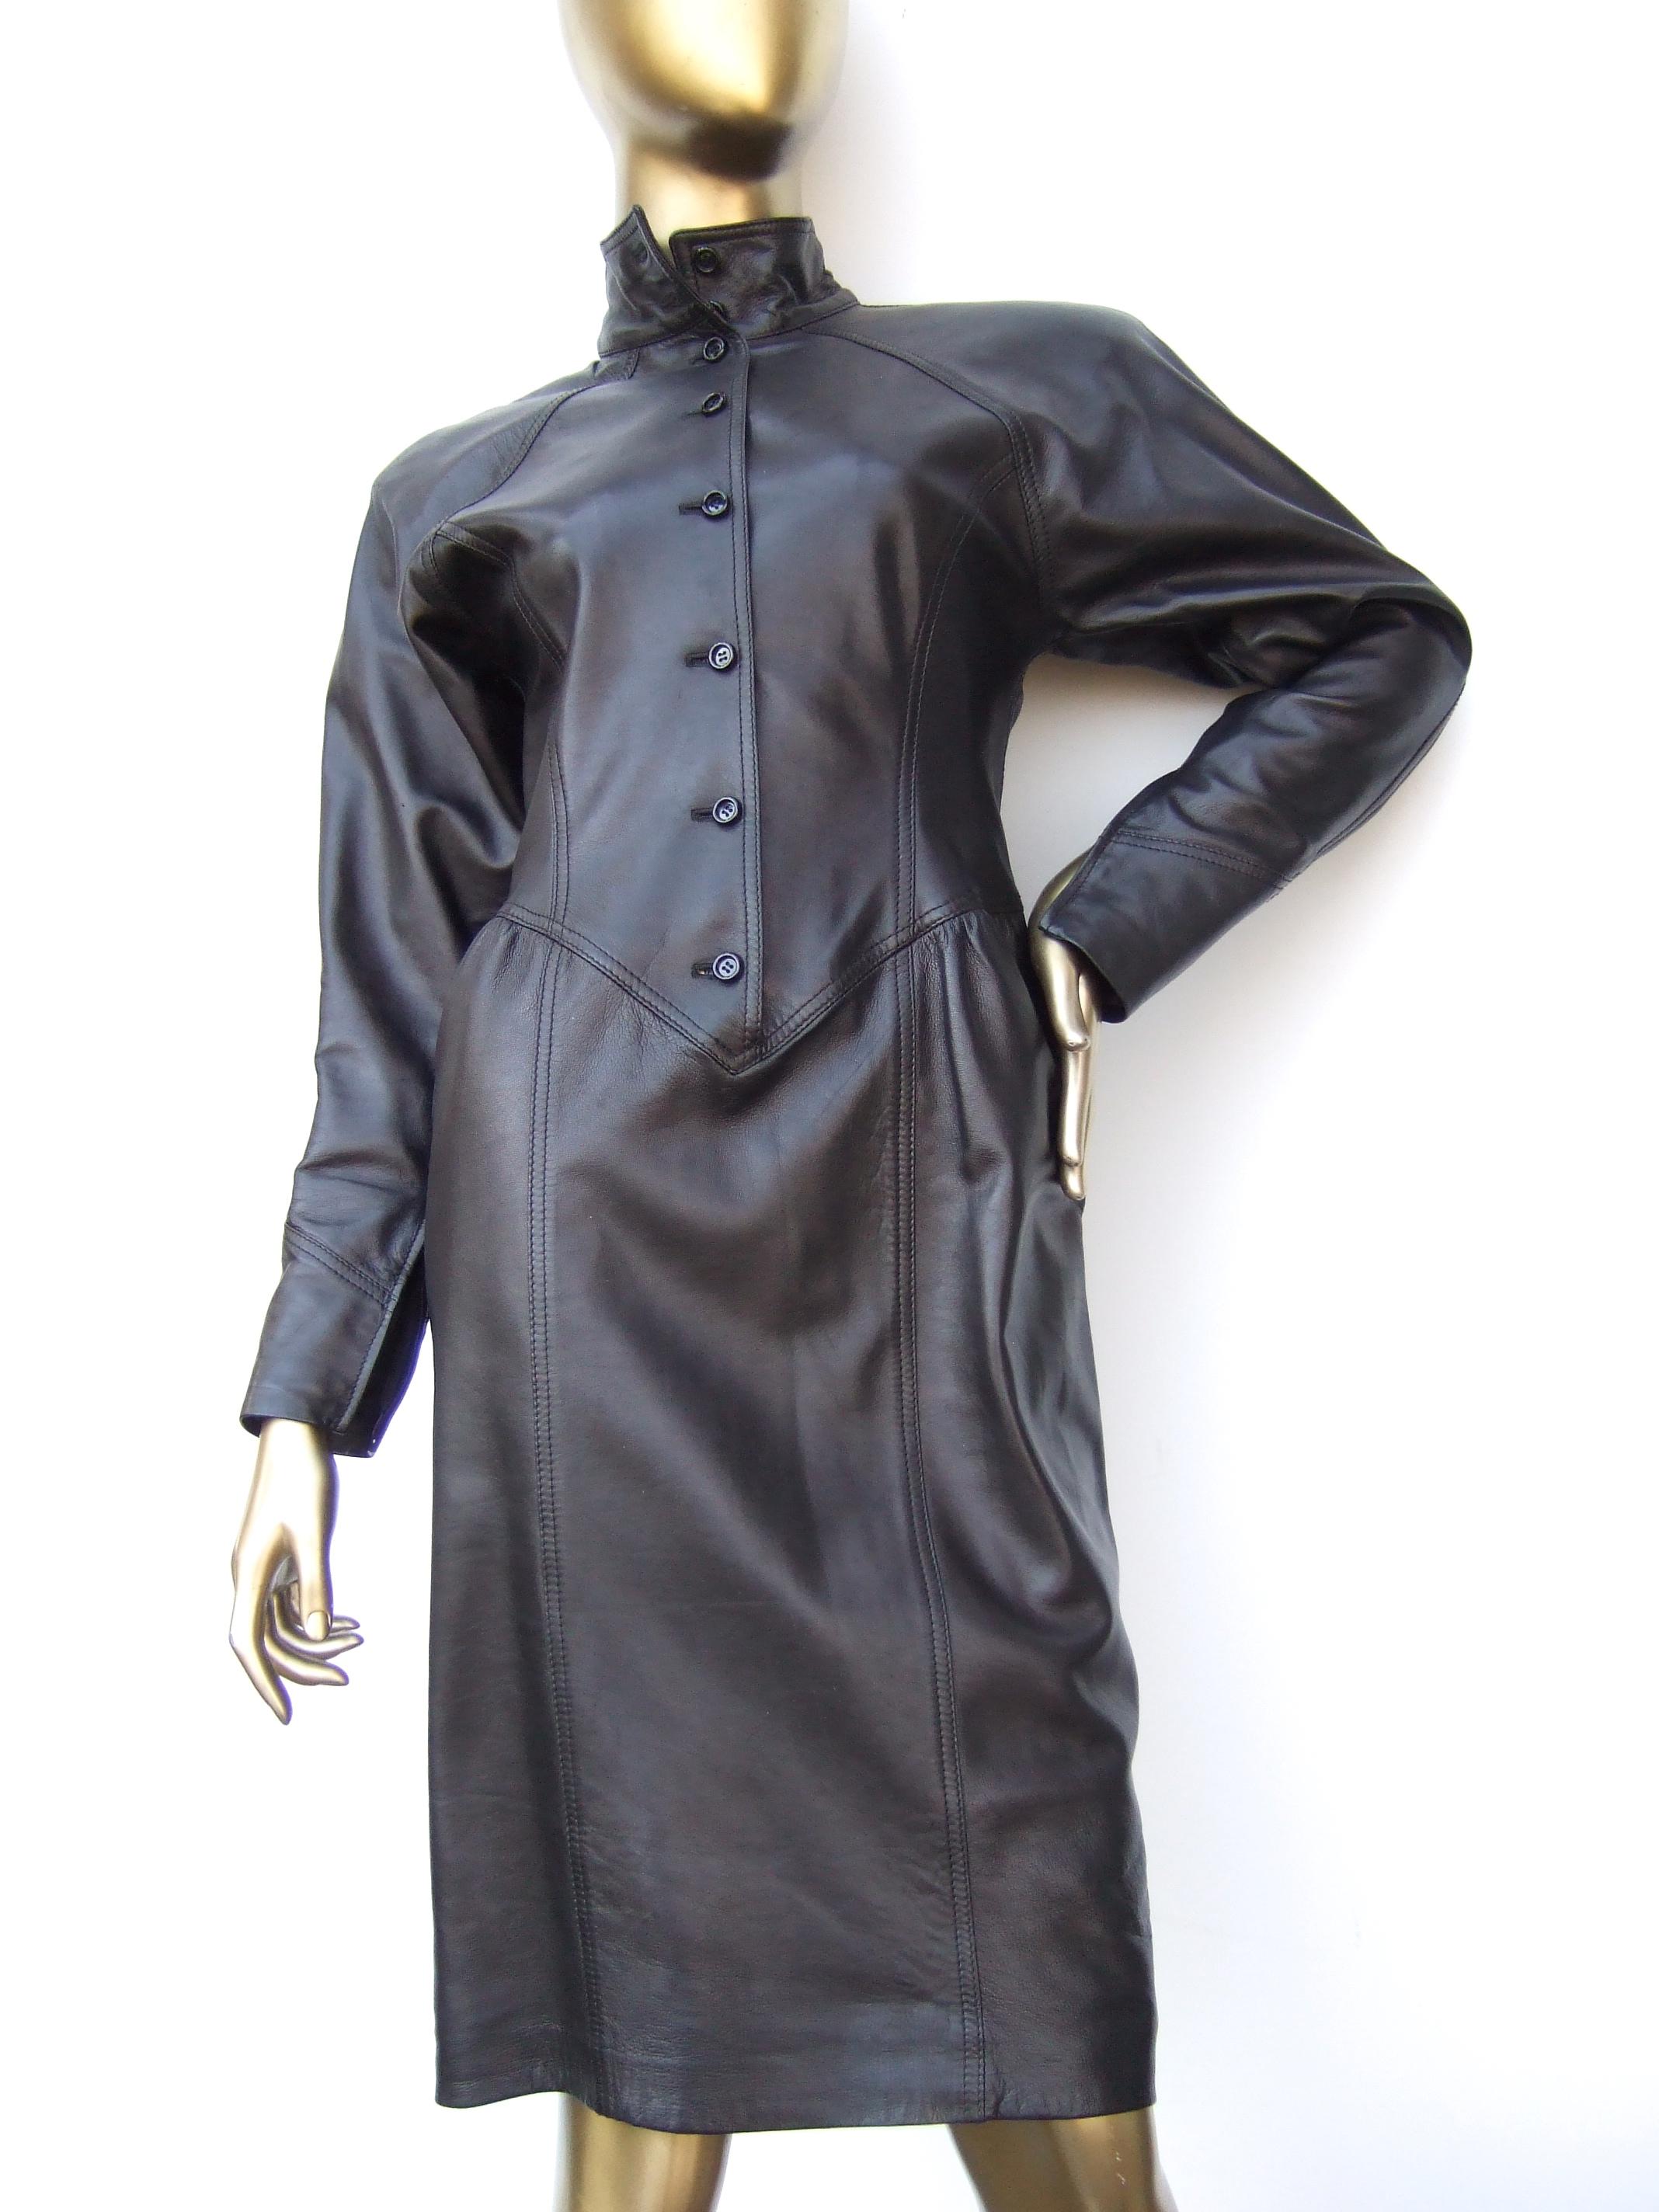 Gris Emanuel Ungaro Paris Avant Garde Edgy Brown Leather Dress Made in Italy c 1980s en vente